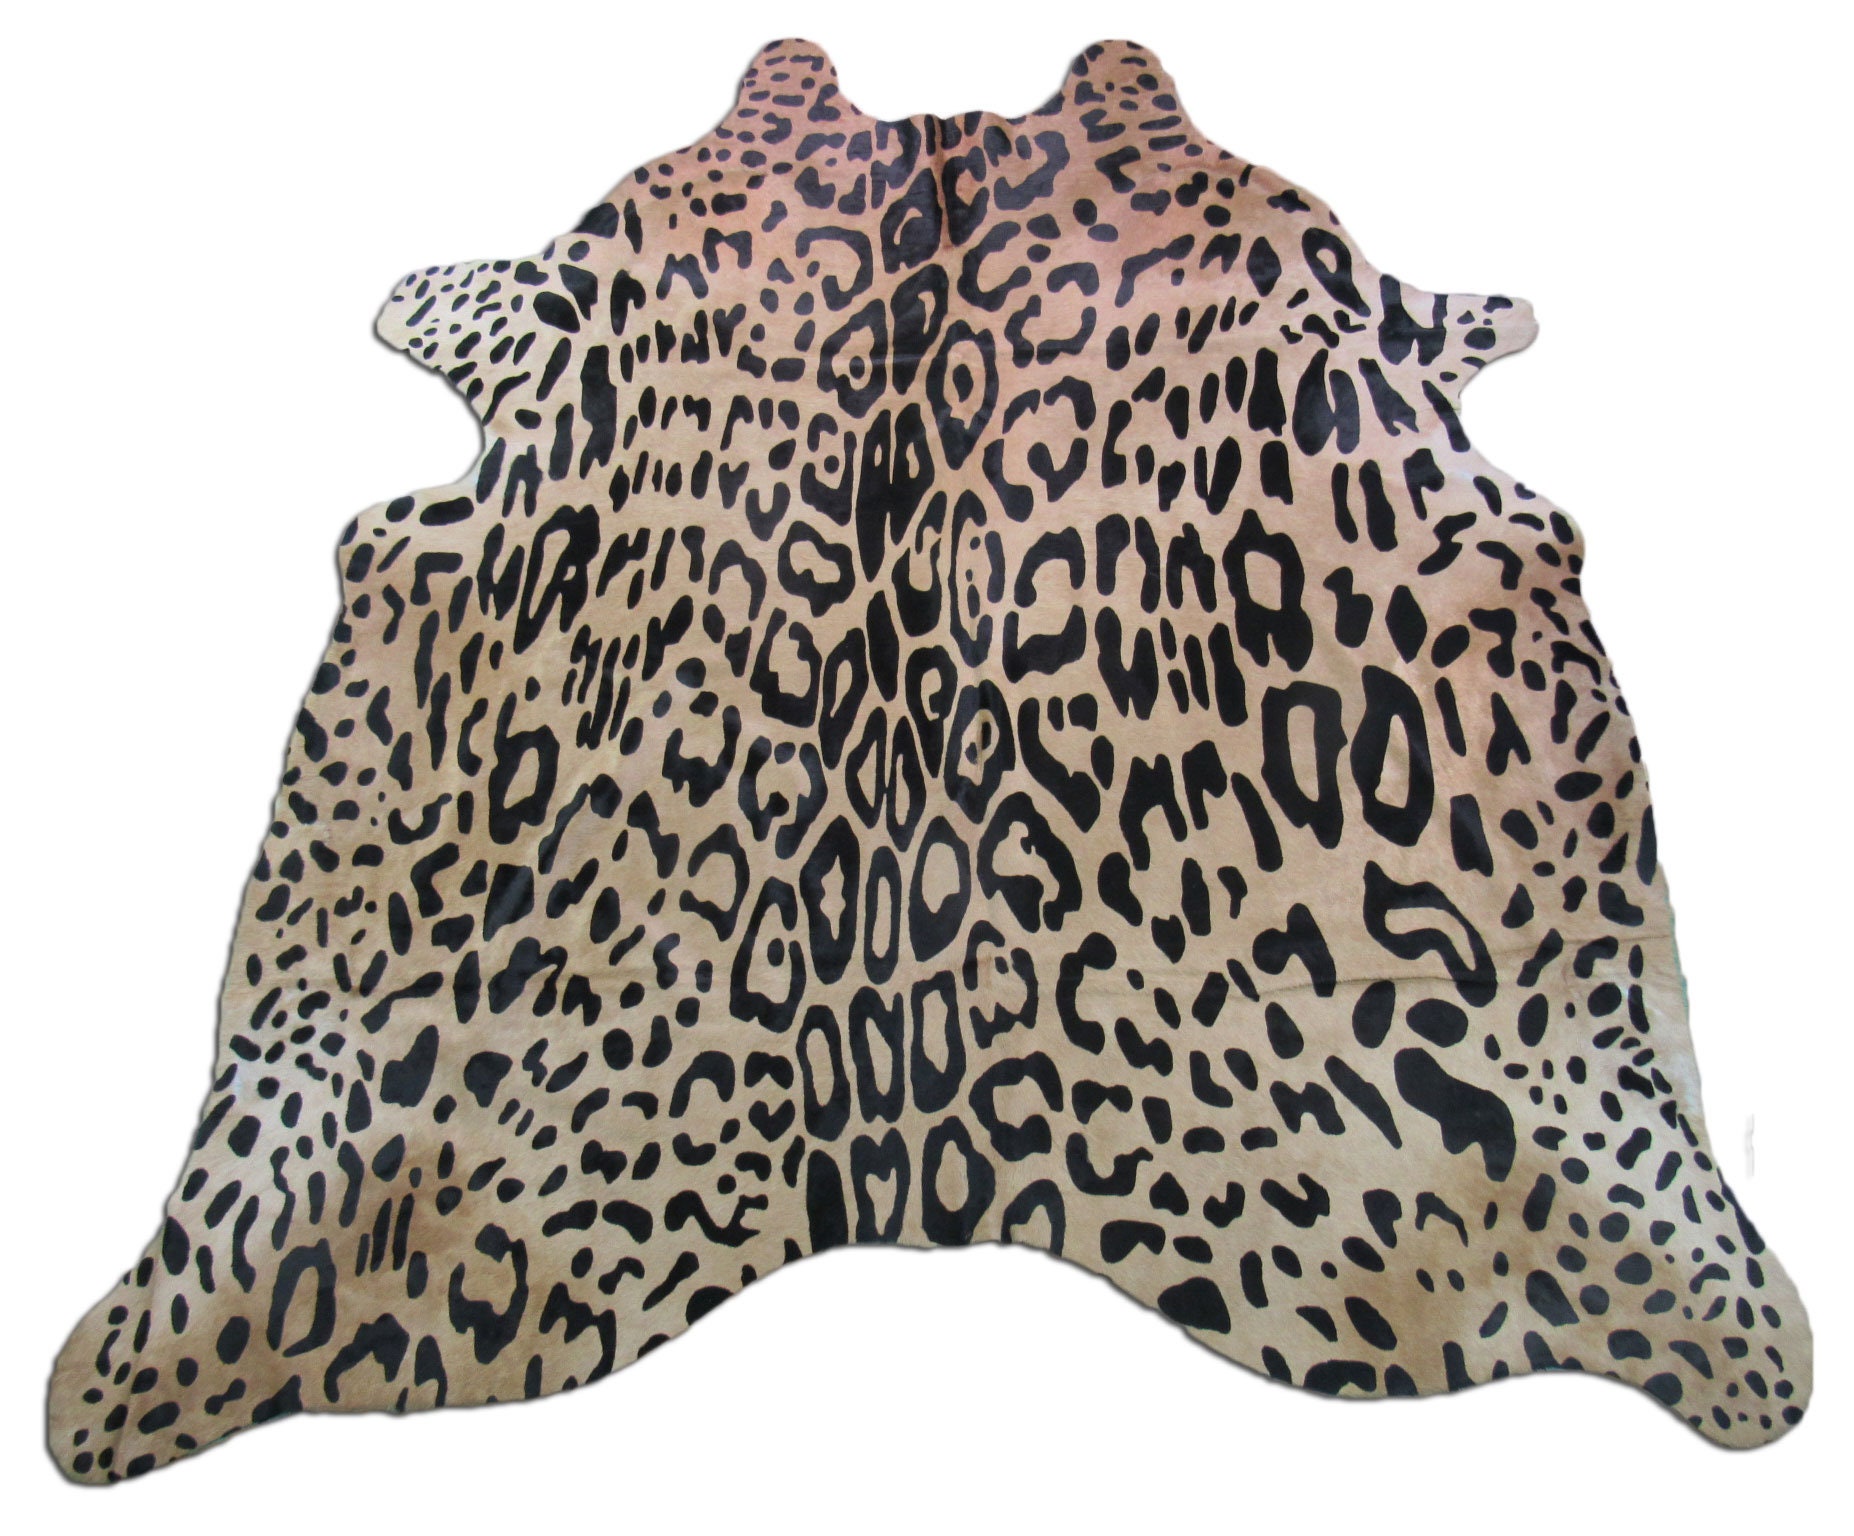 Leopard Cowhide Rug, Jaguar Print Cowhide, Leopard Cowhide Average Size:  7.5X6.5 Feet -  Finland